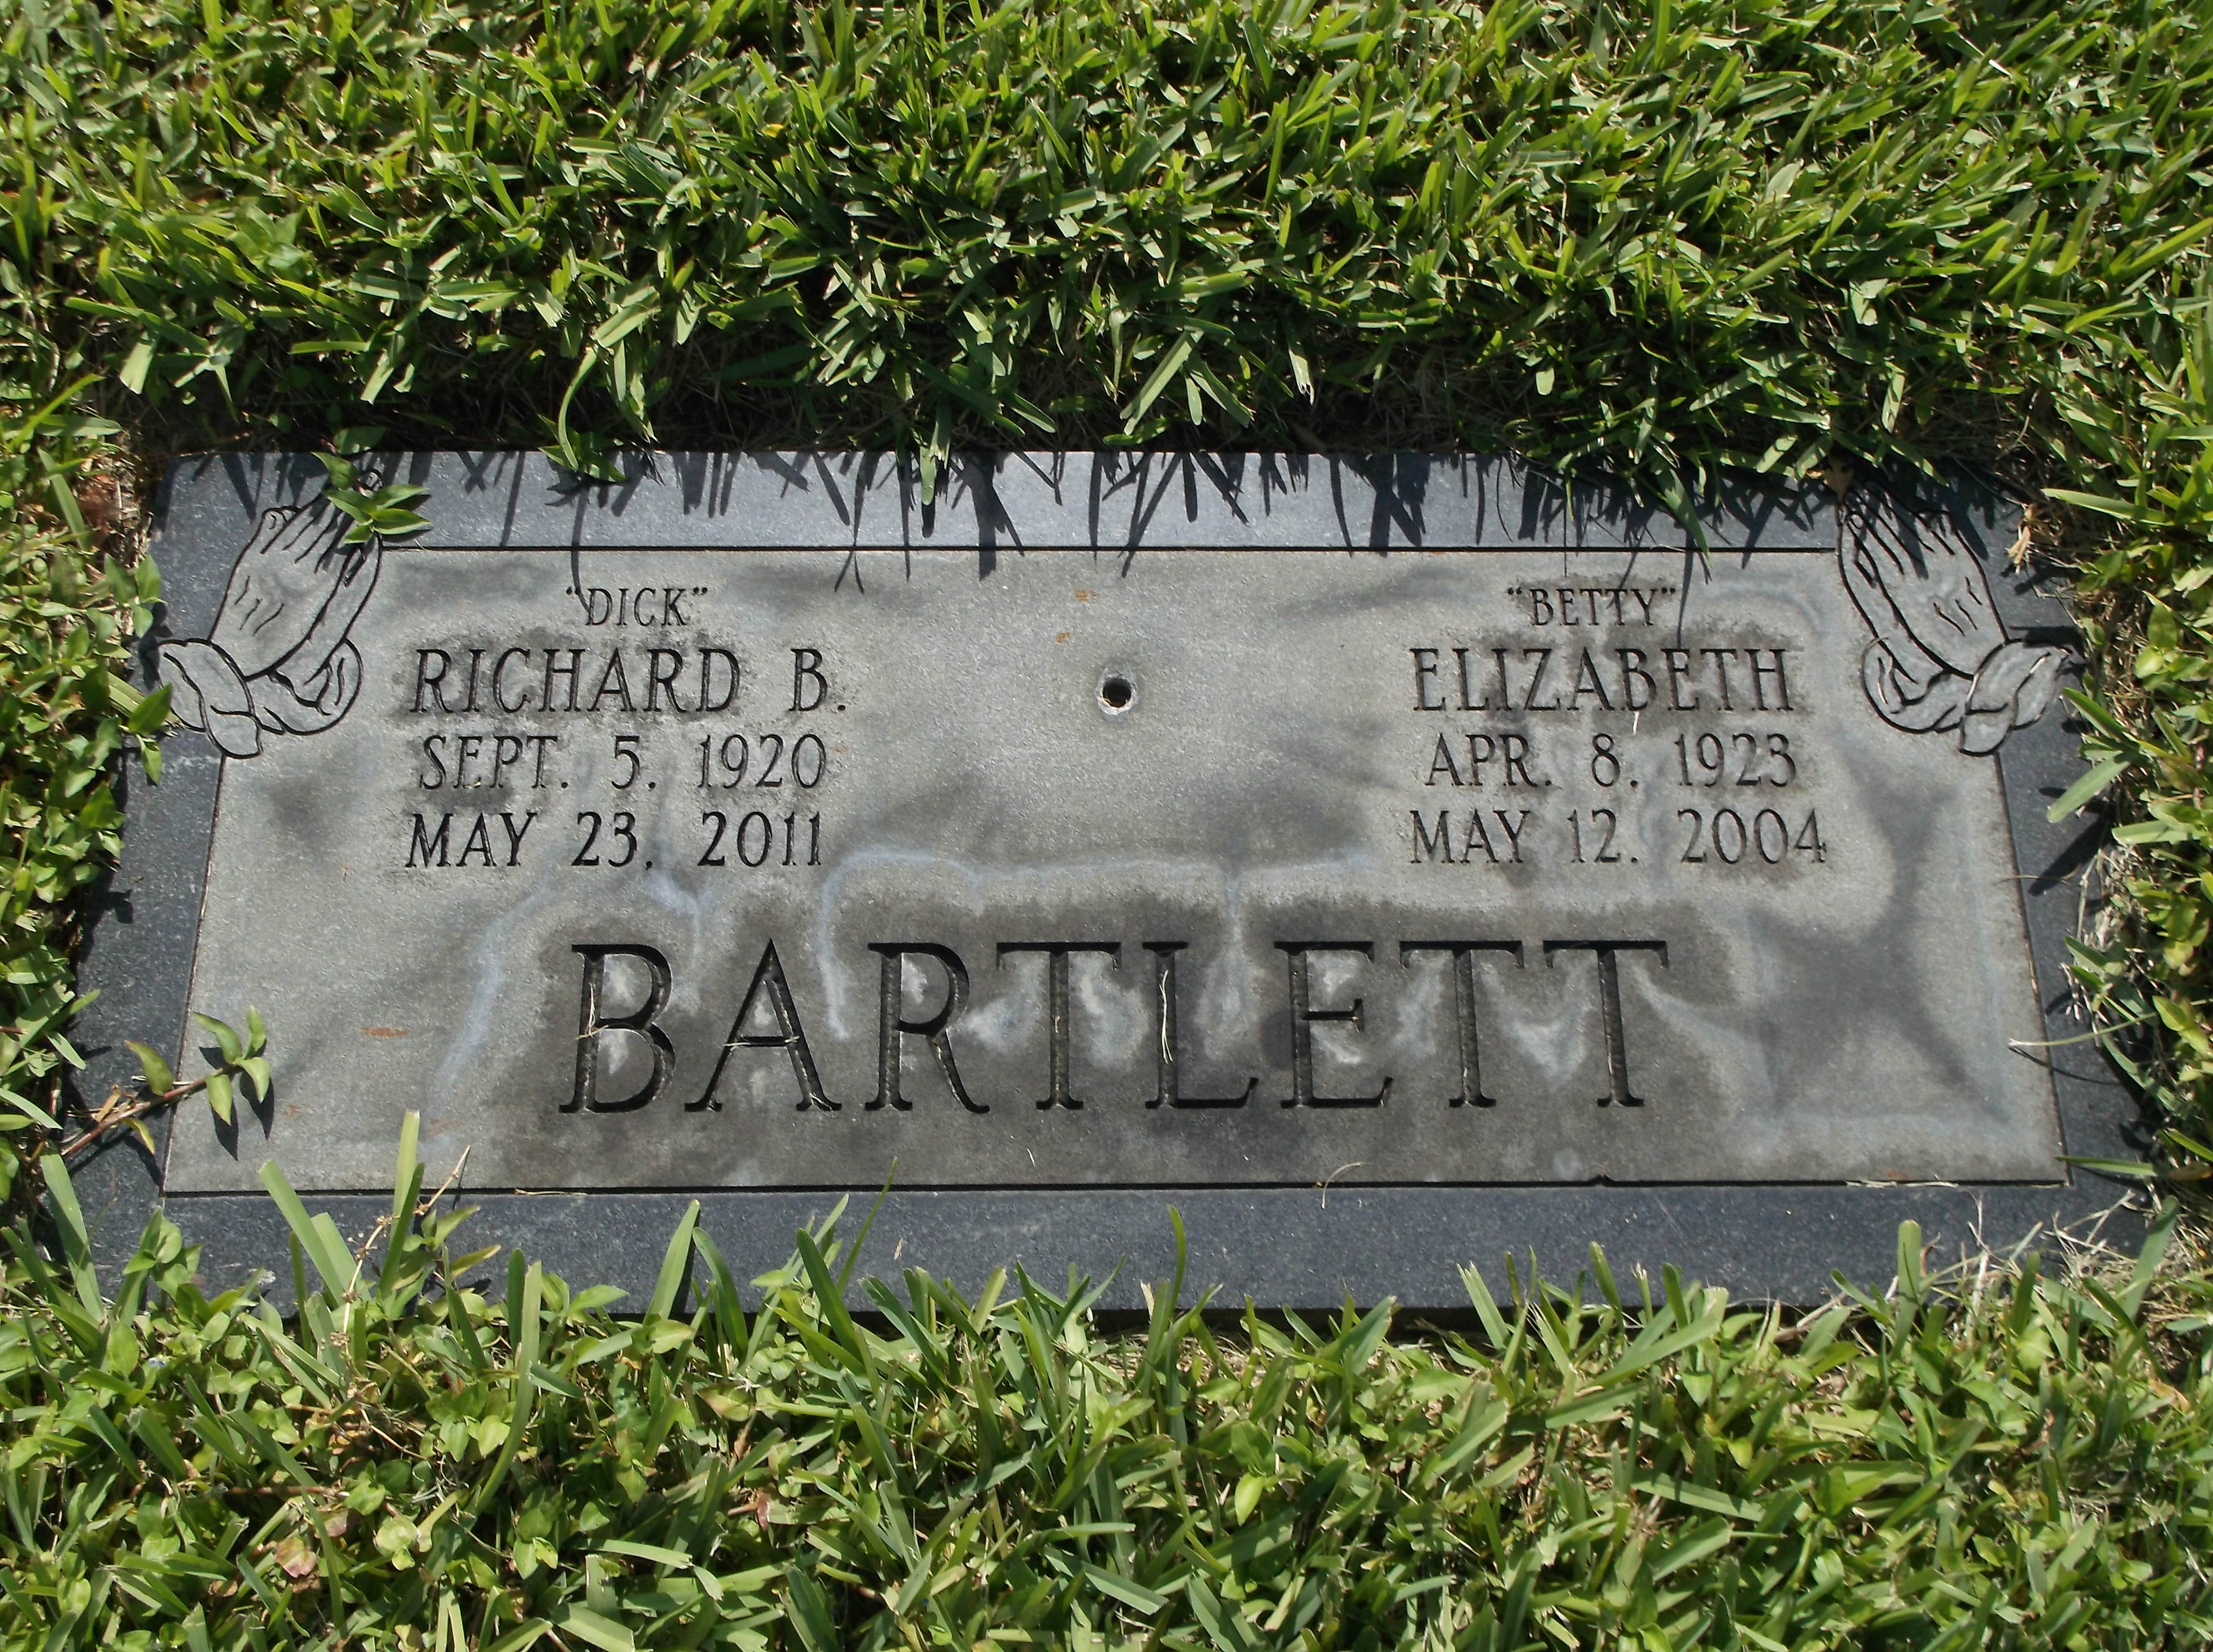 Elizabeth "Betty" Bartlett